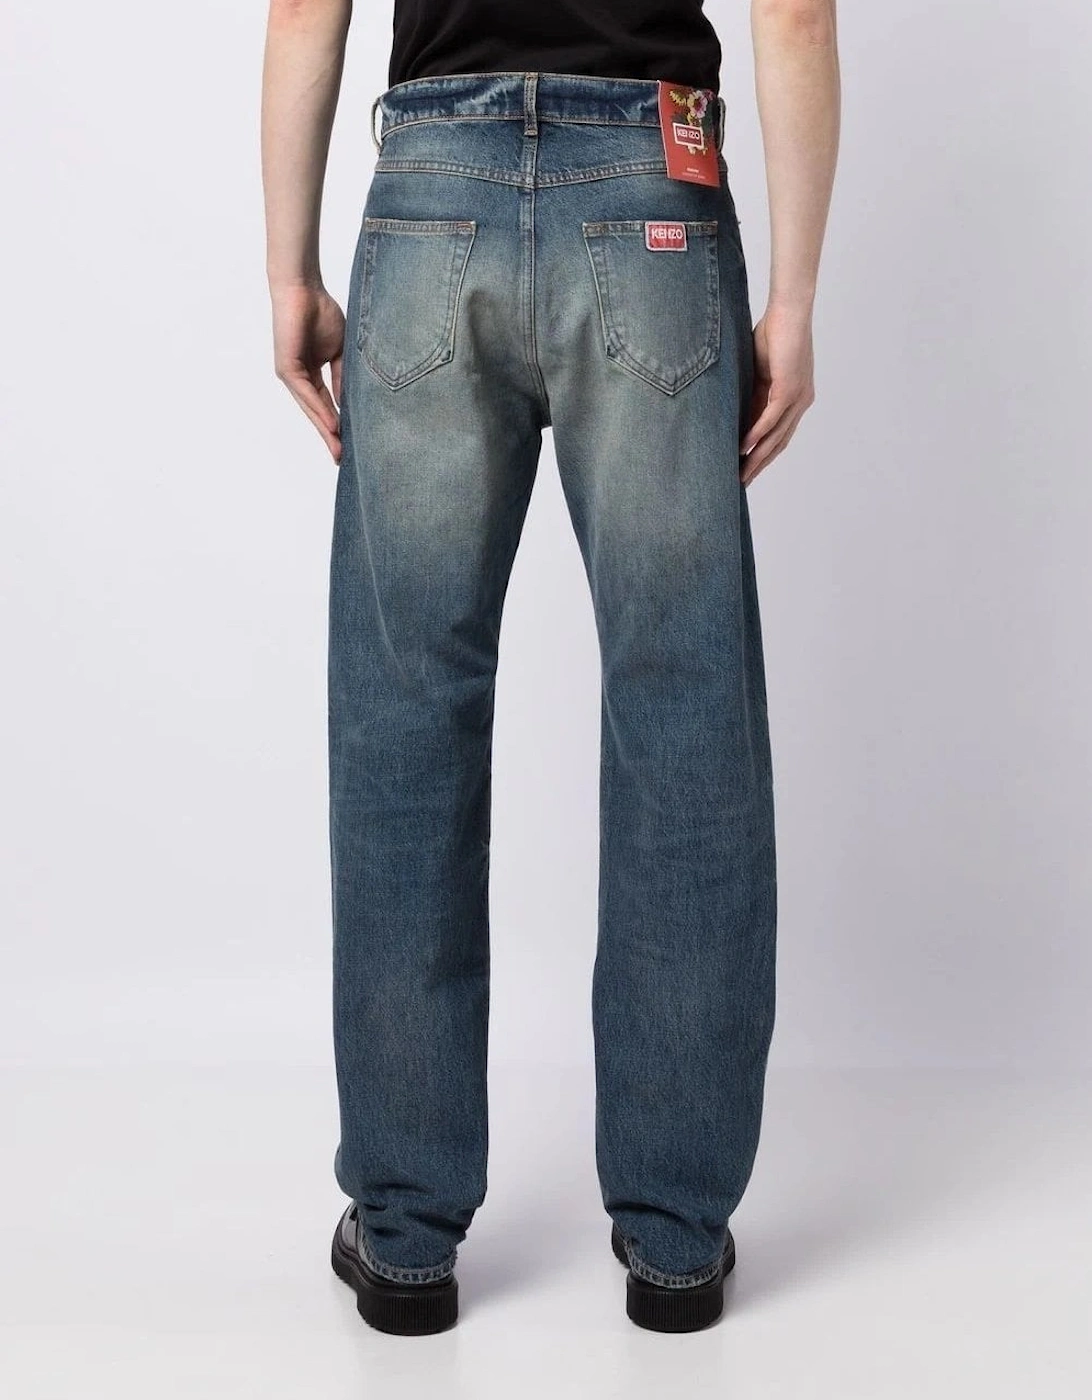 ASAGAO Denim Jeans